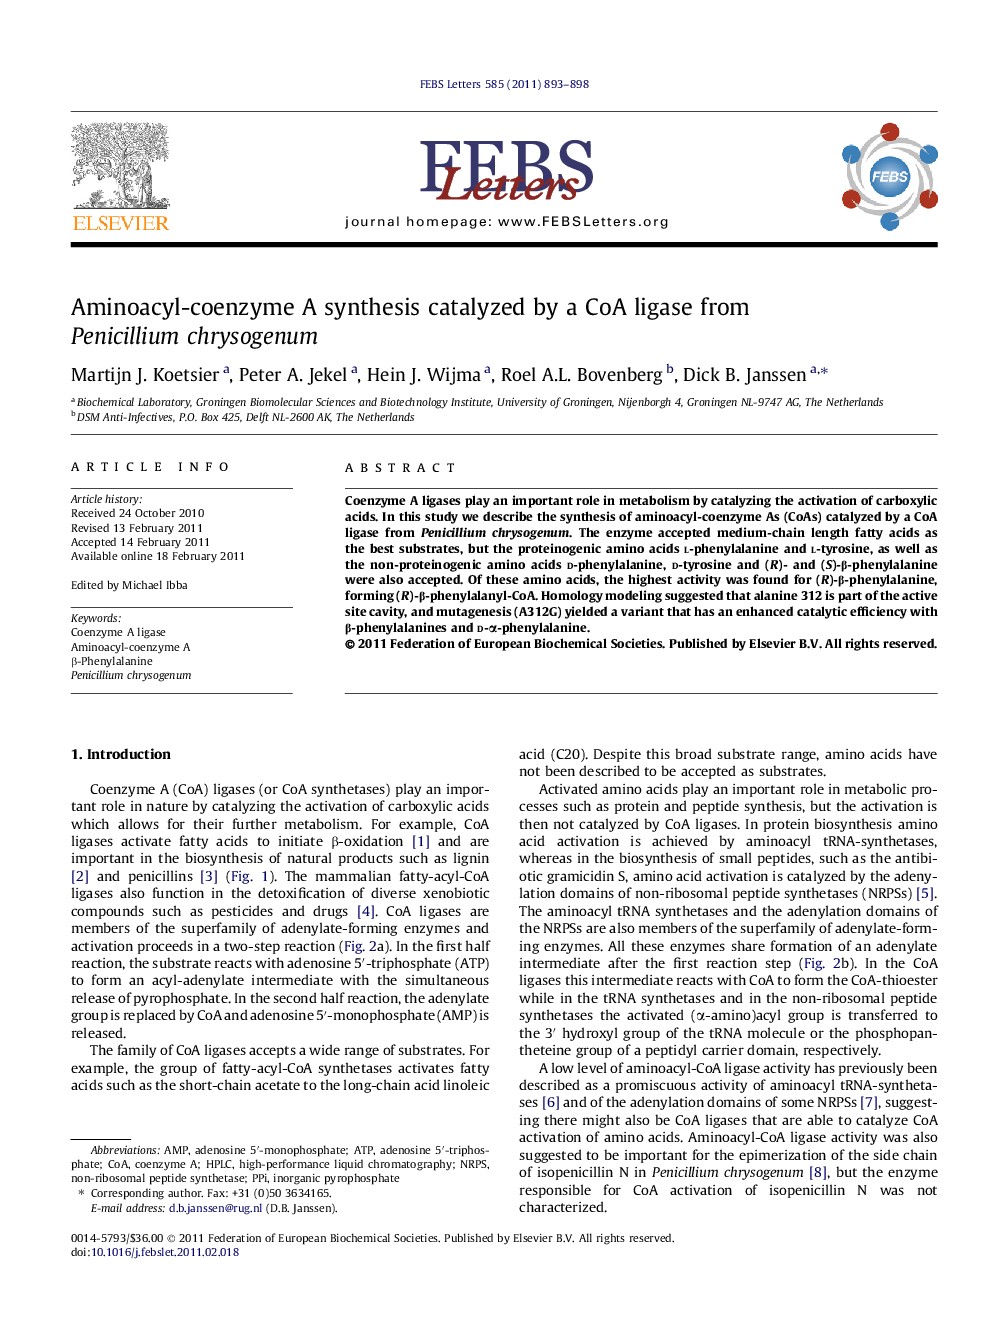 Aminoacyl-coenzyme A synthesis catalyzed by a CoA ligase from Penicillium chrysogenum